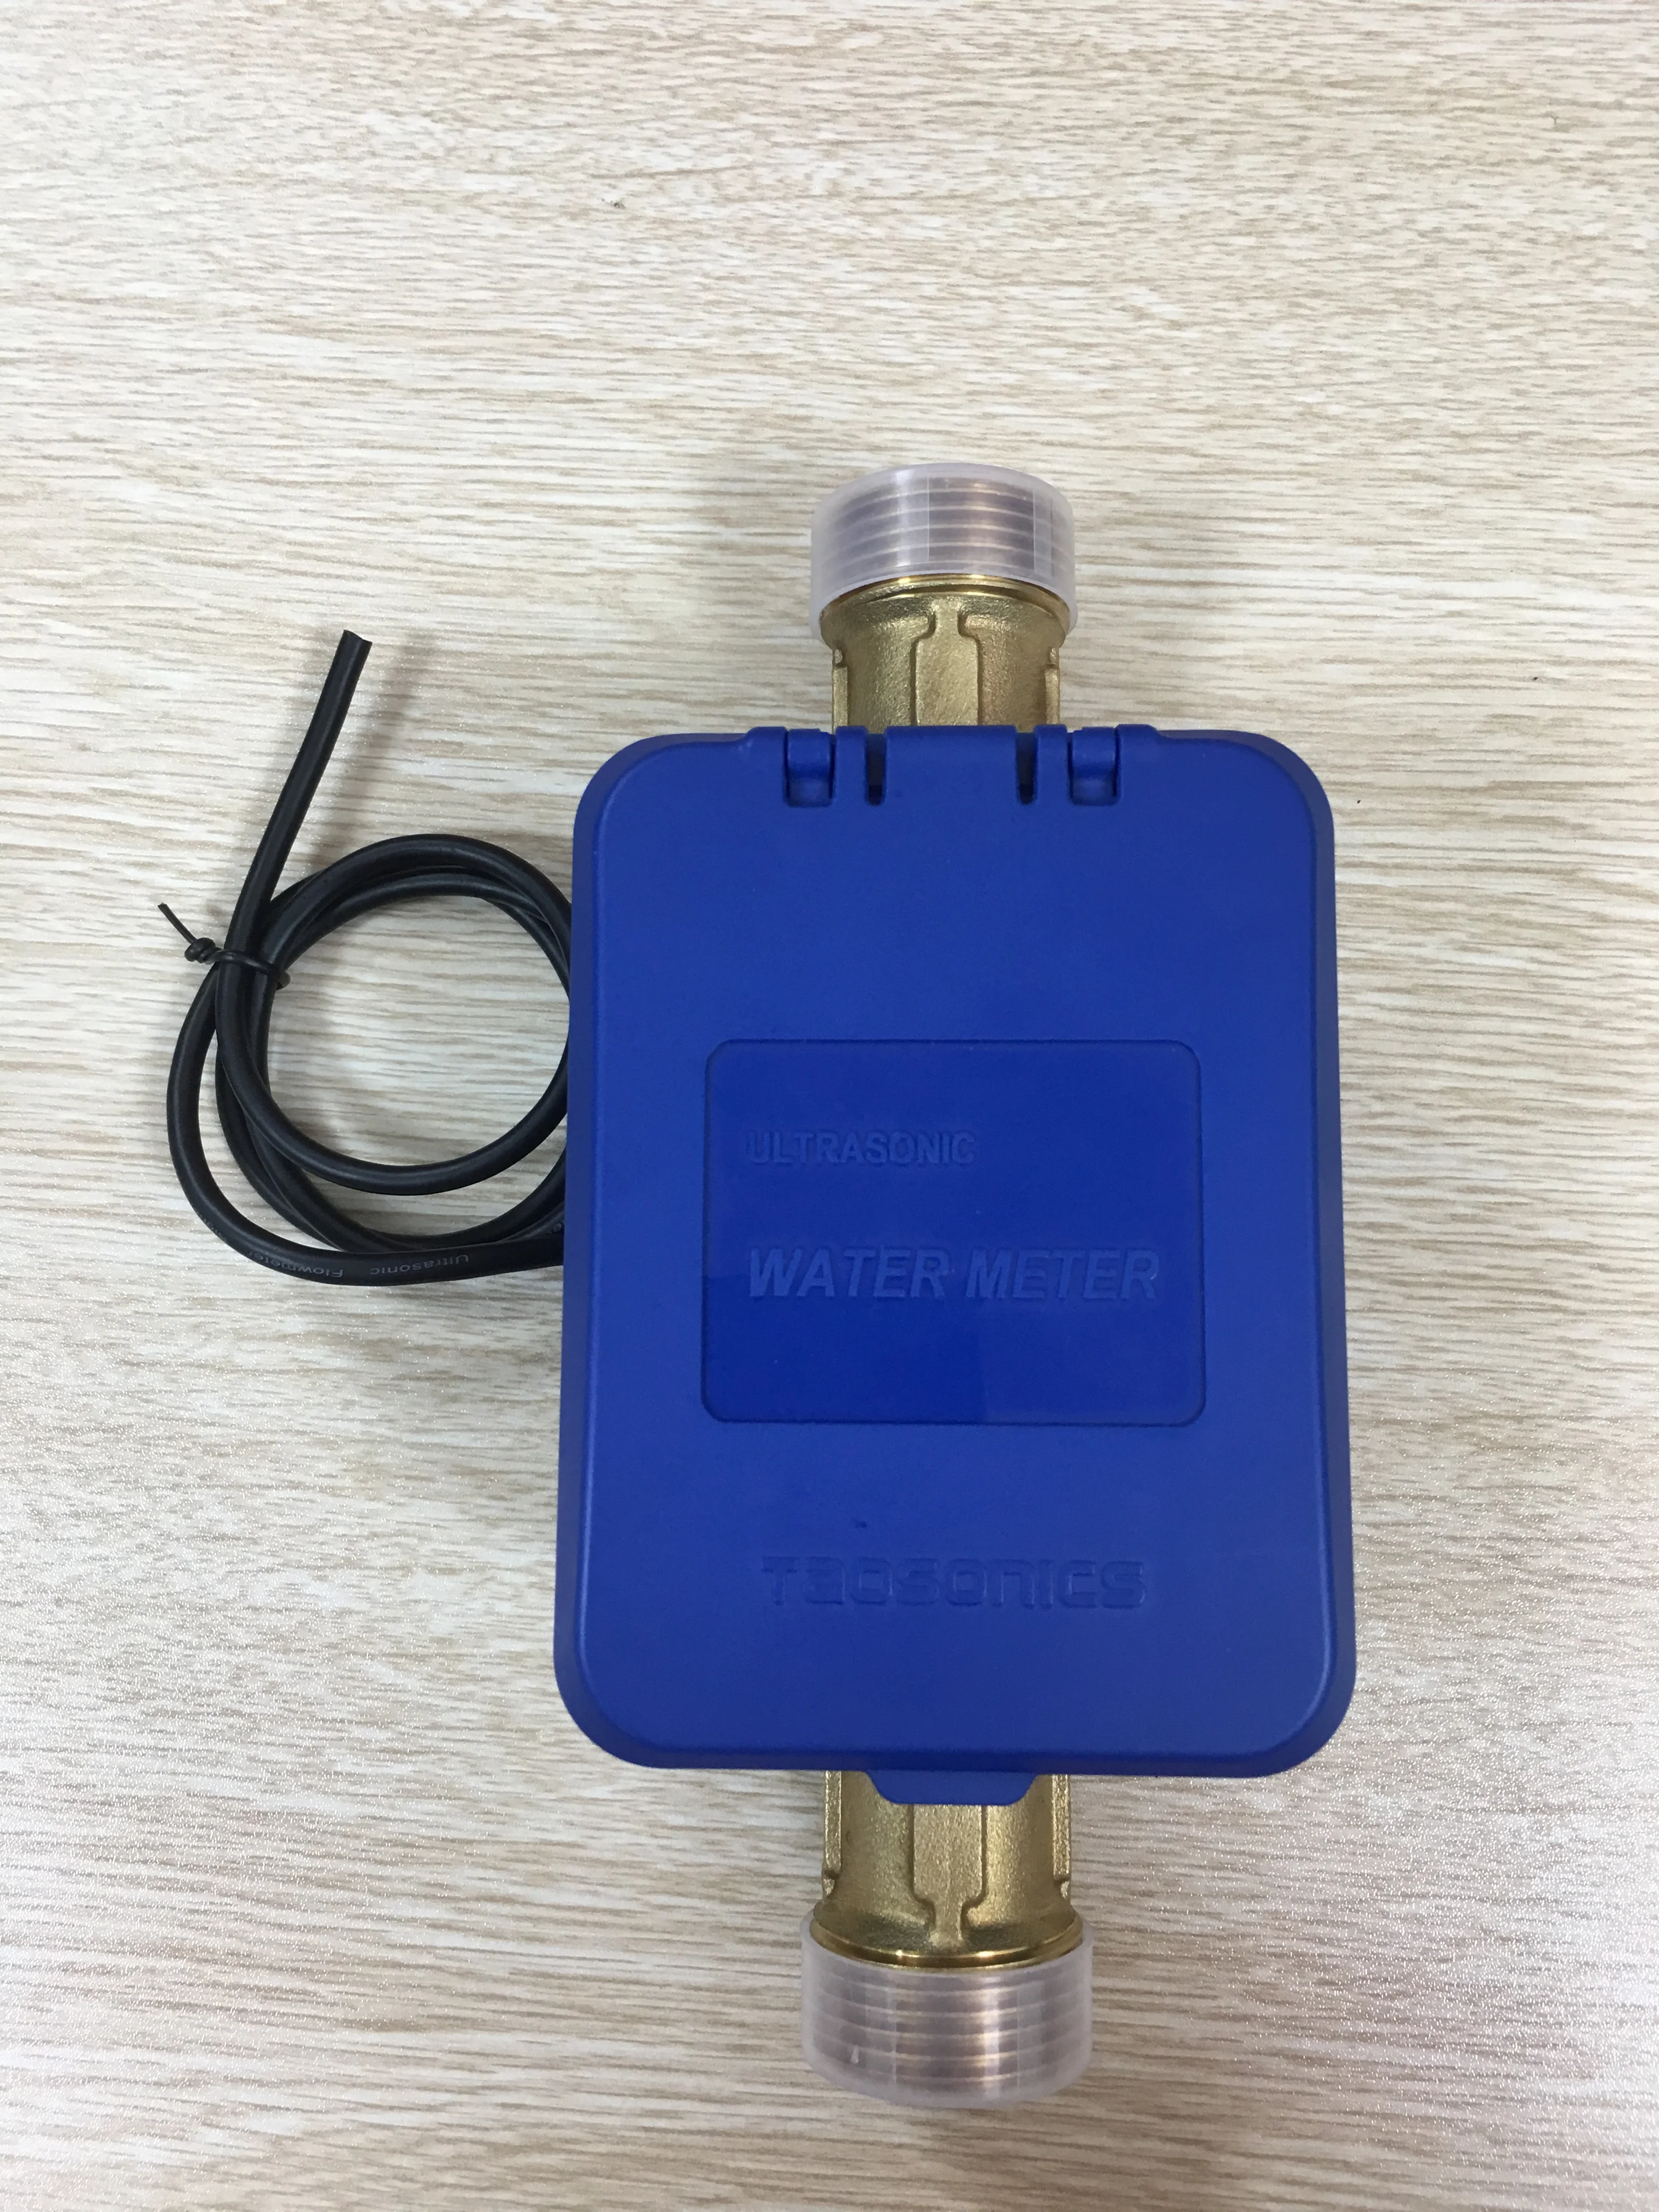 Remote reading wireless residential ultrasonic water meter